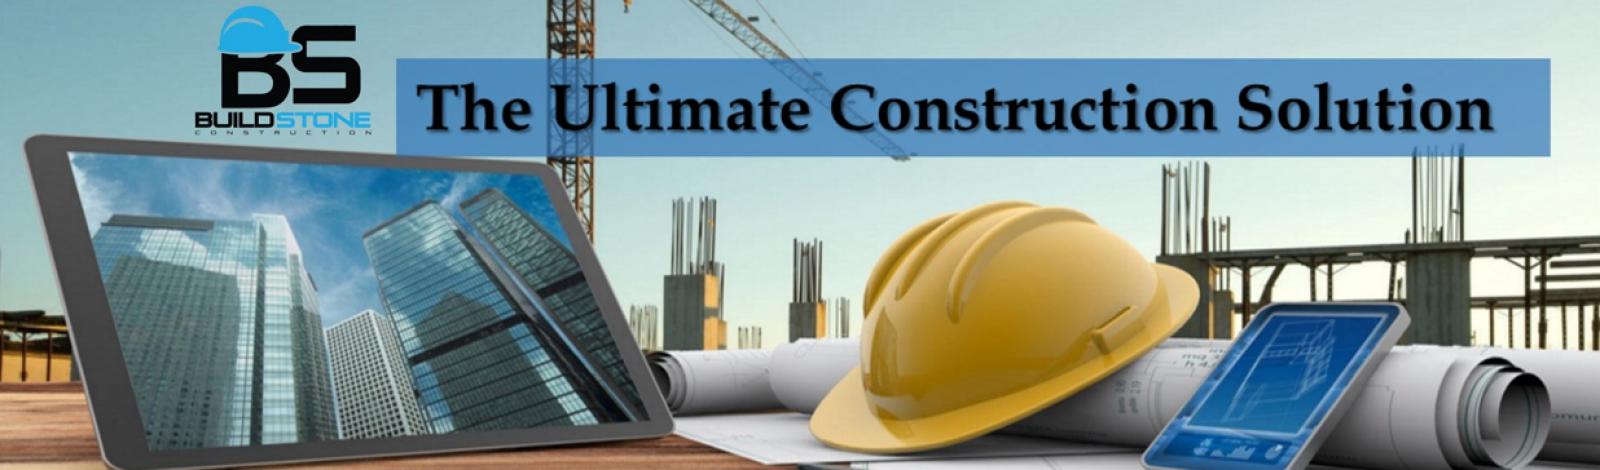 Buildstone Construction Co. Ltd. banner